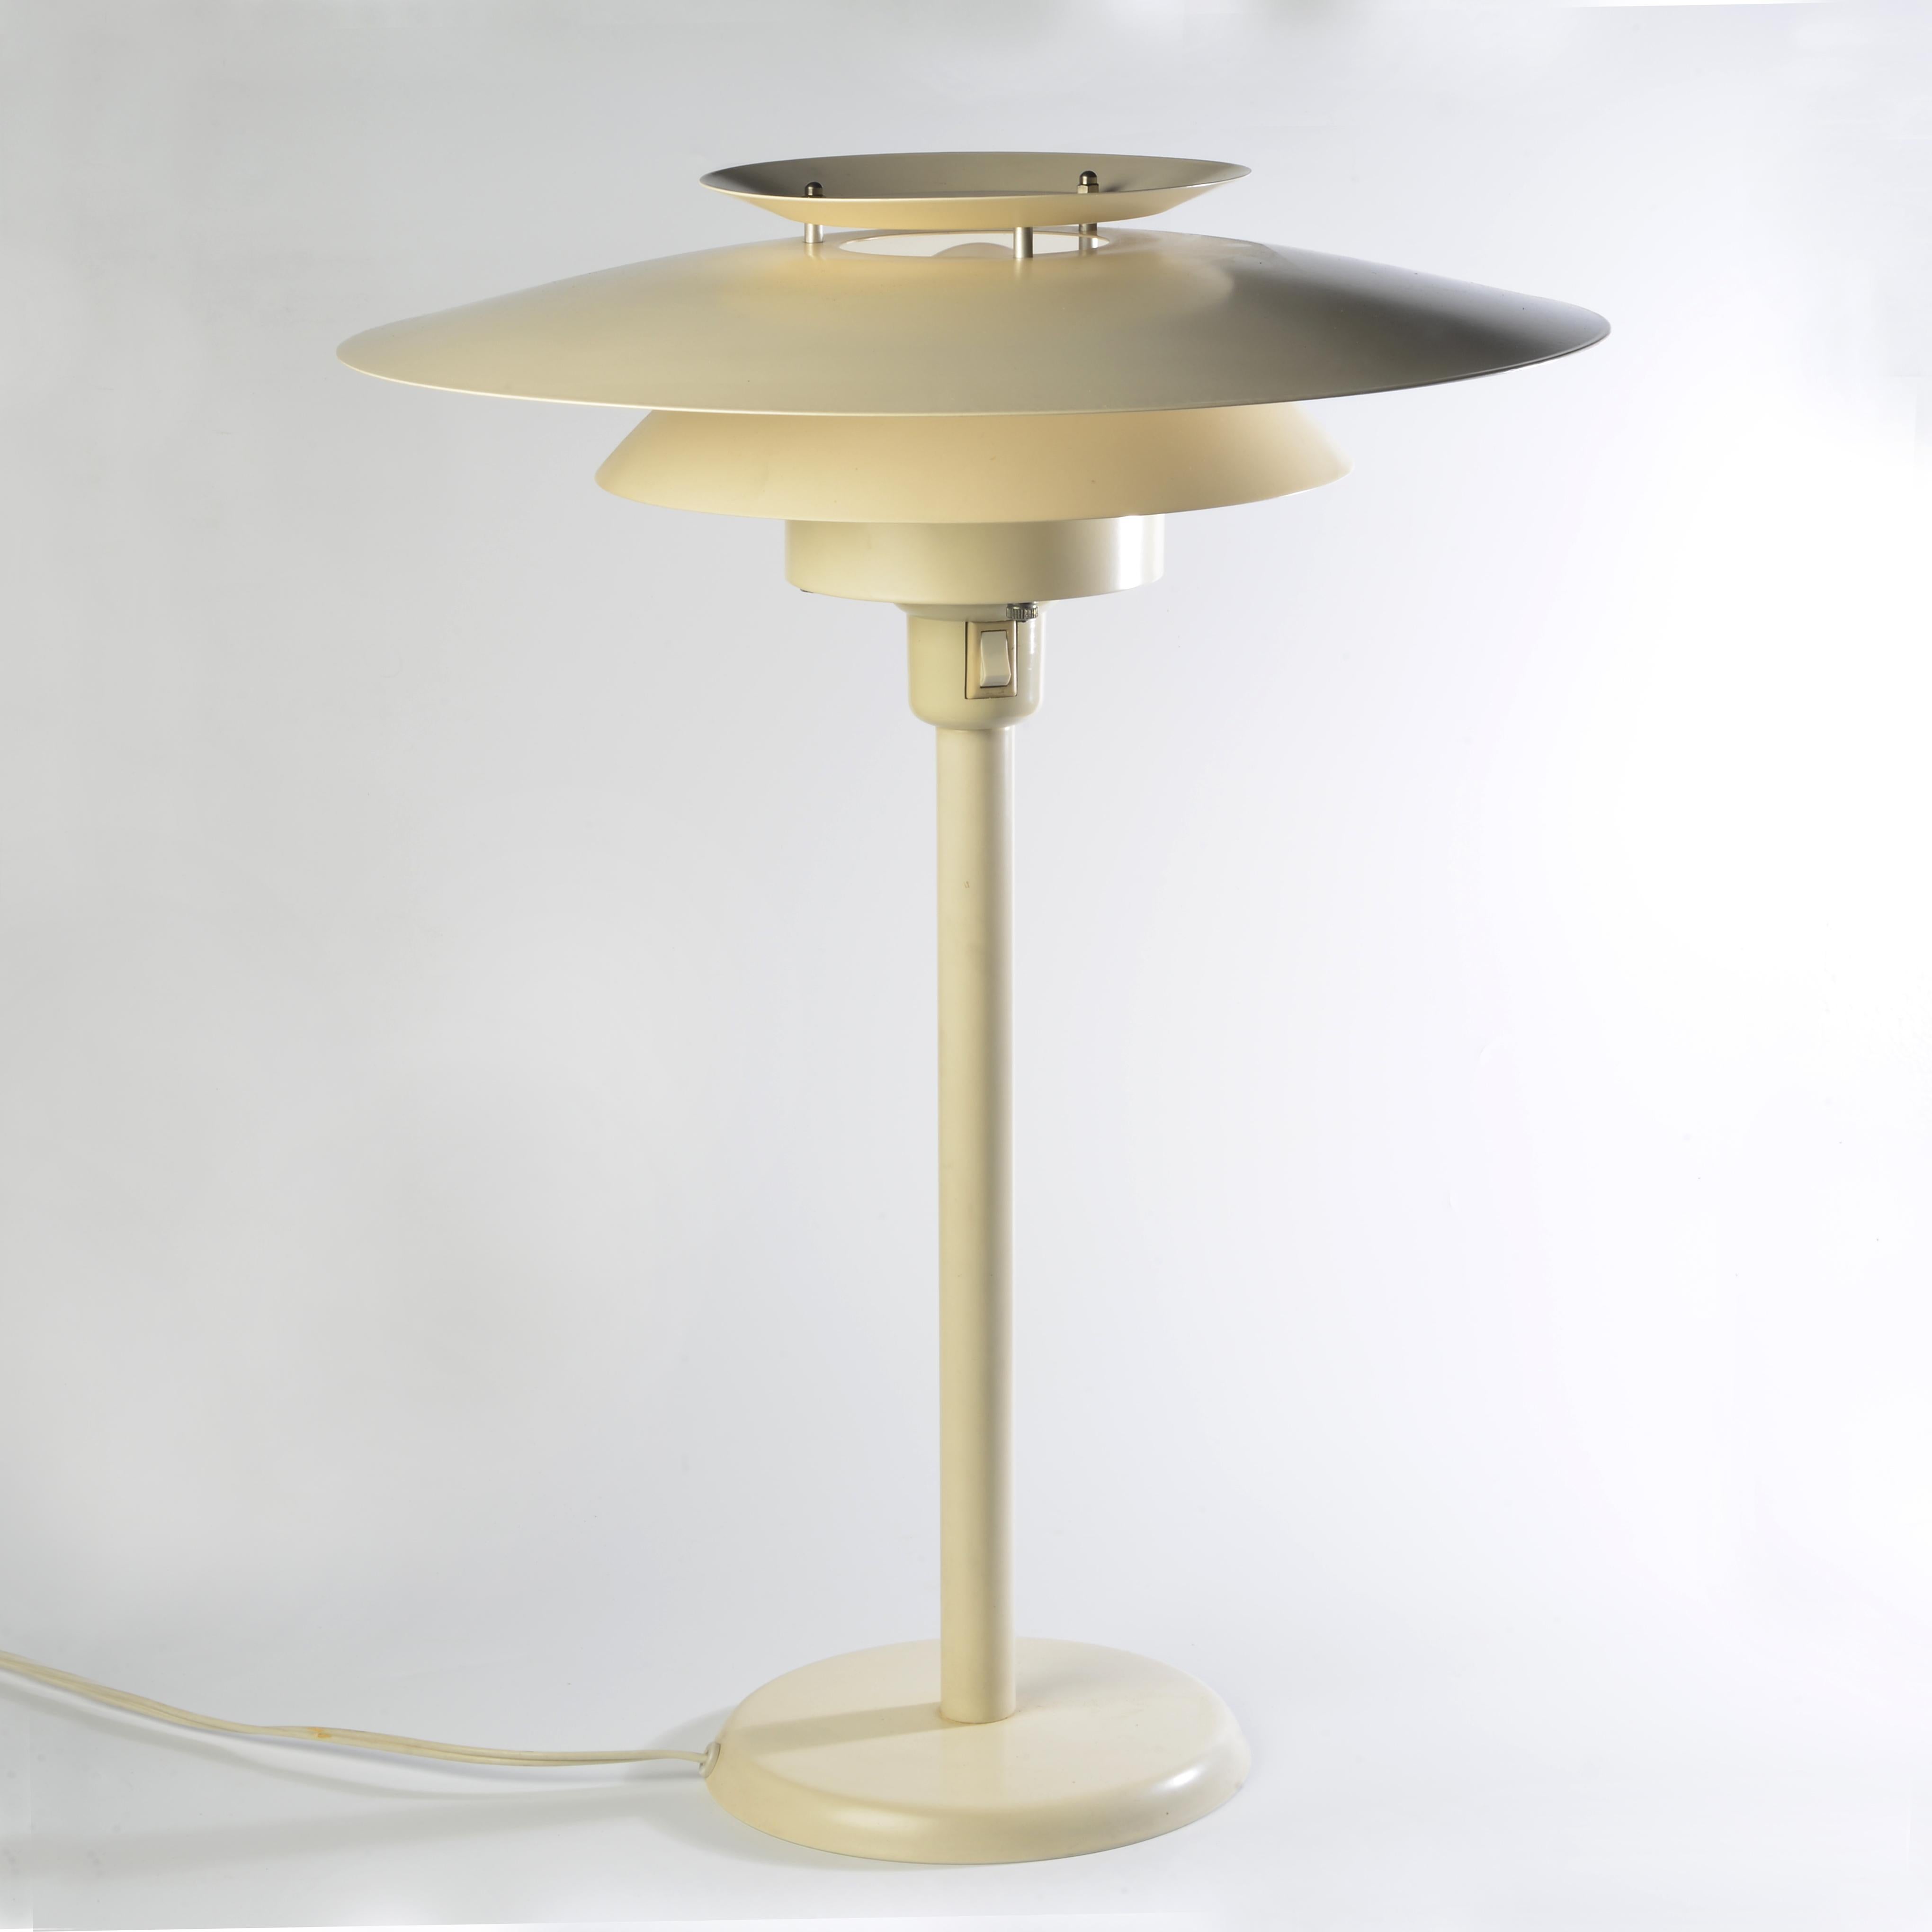 Table lamp in cream-coloured lacquered sheet metal, design by Simon Henningsen (1920-1974), model 